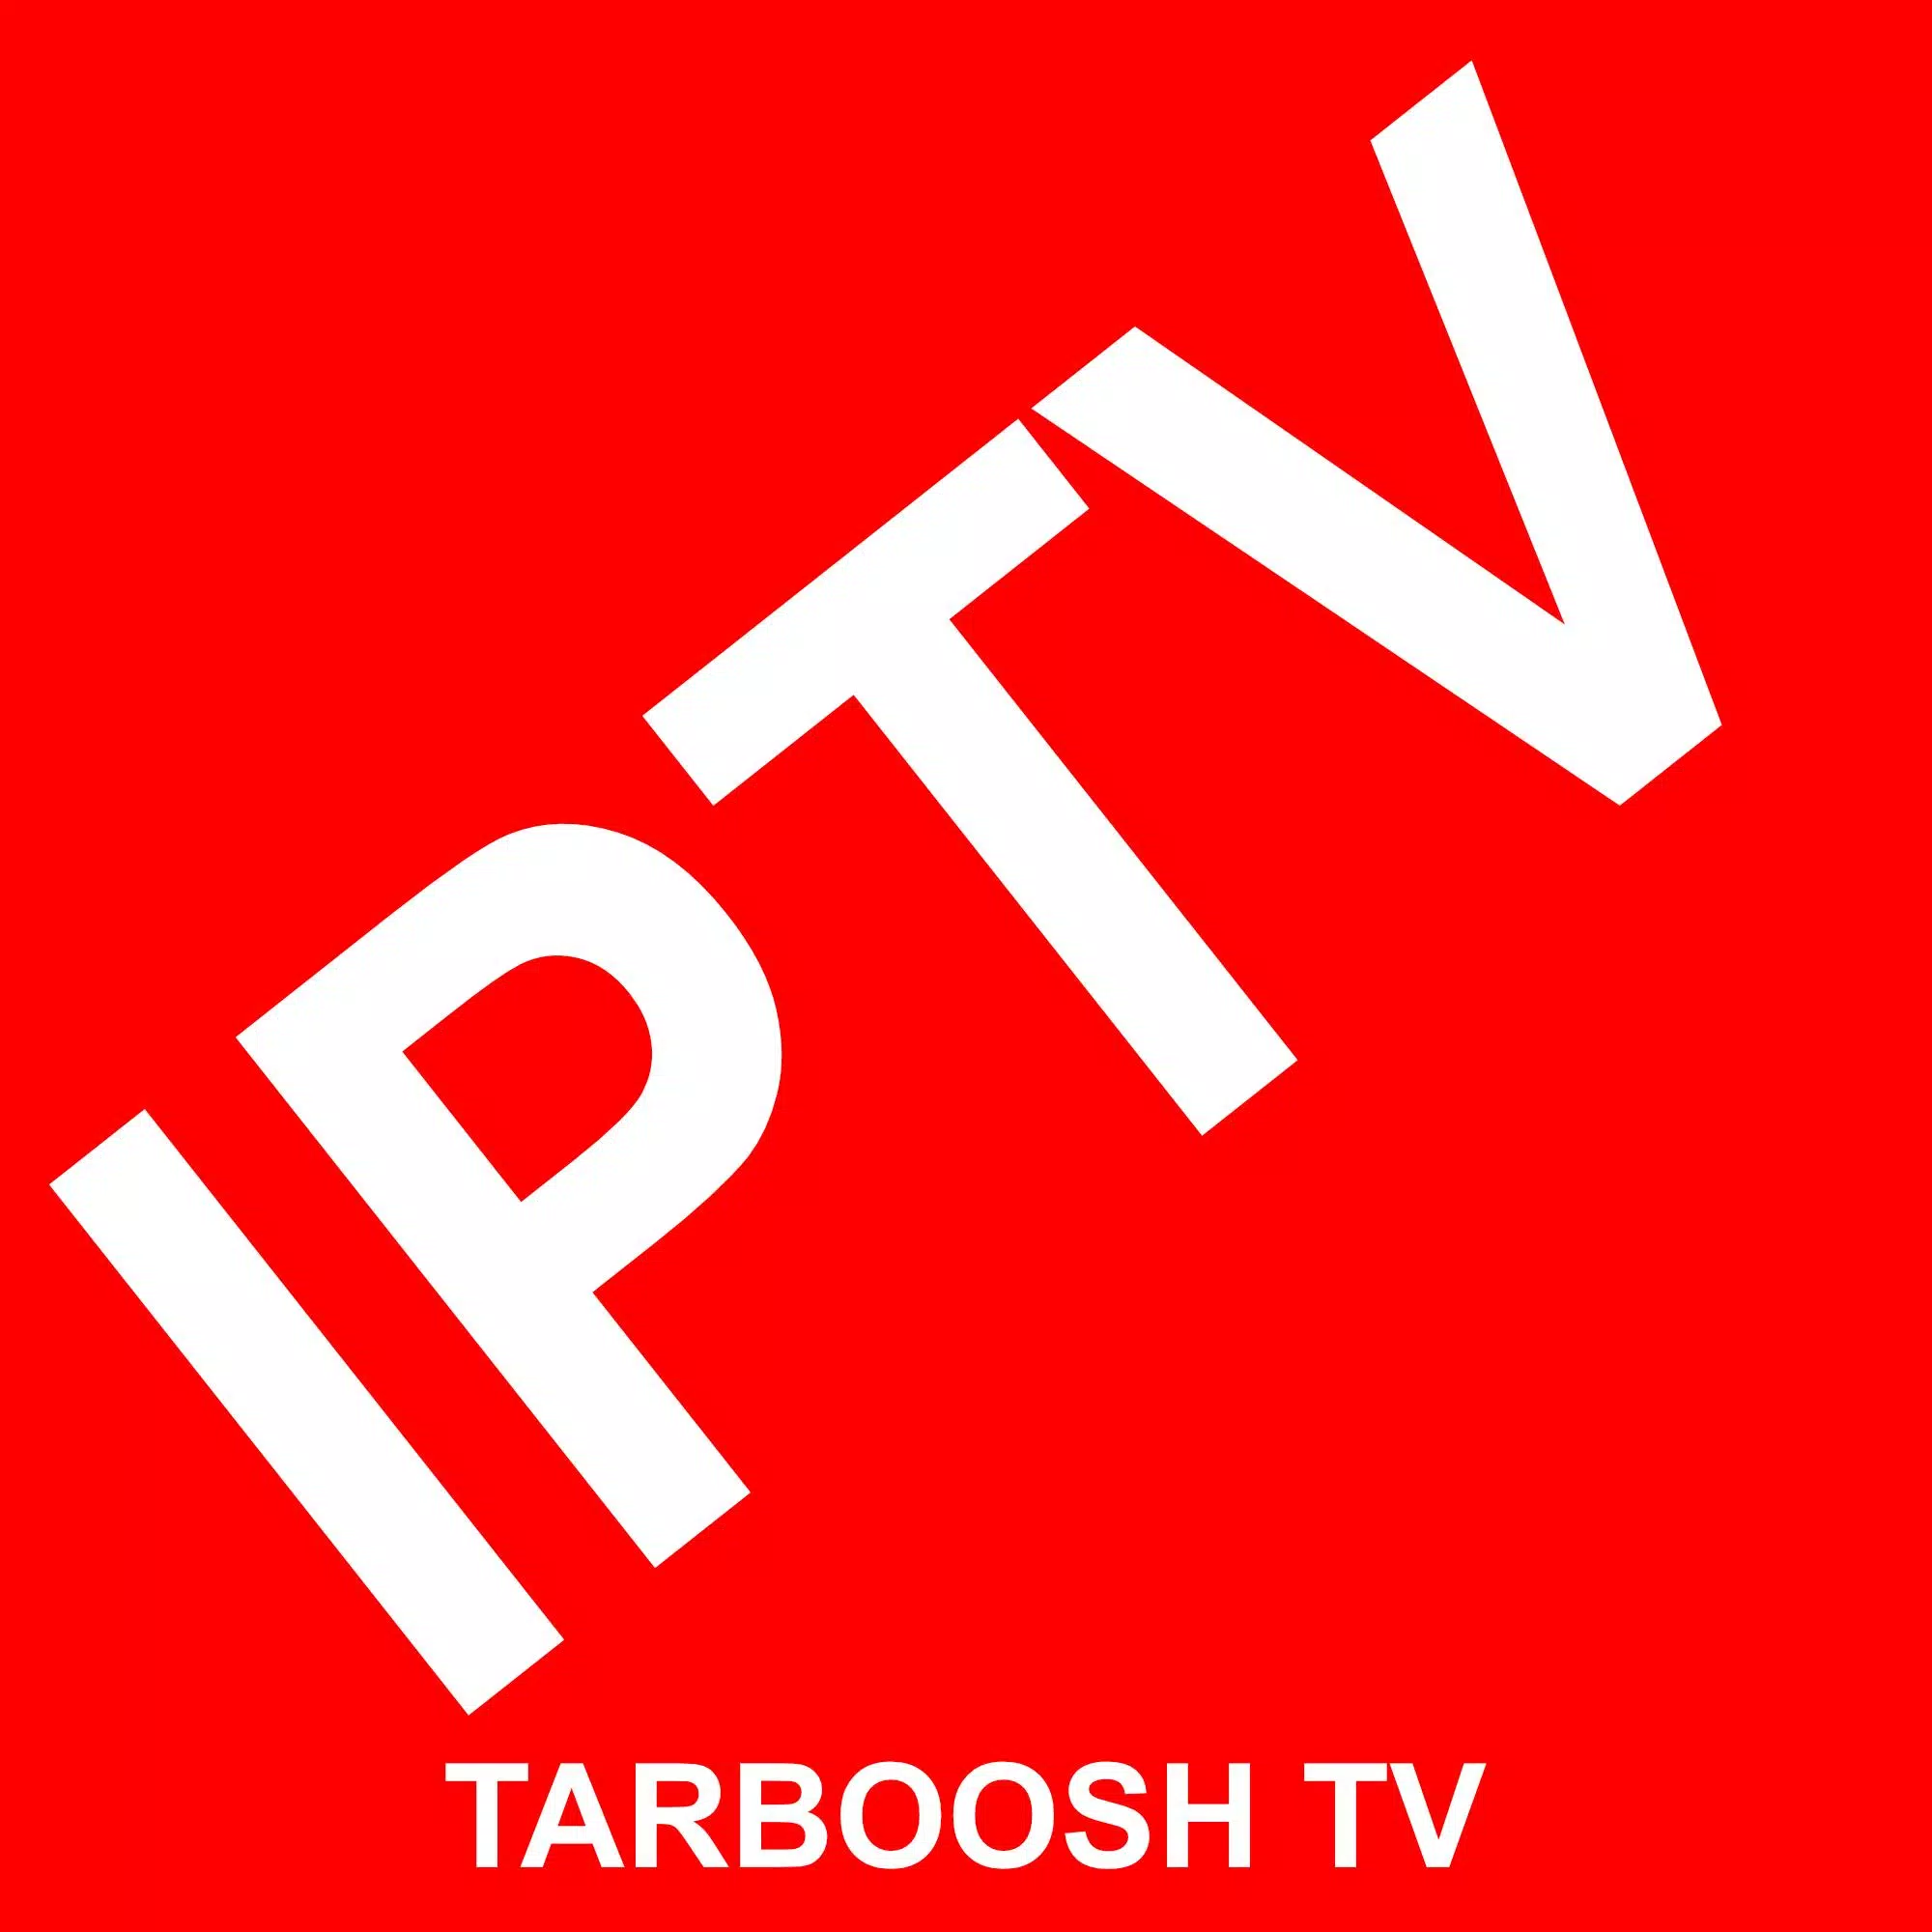 TARBOOSH TV HD IPTV for Android - APK Download